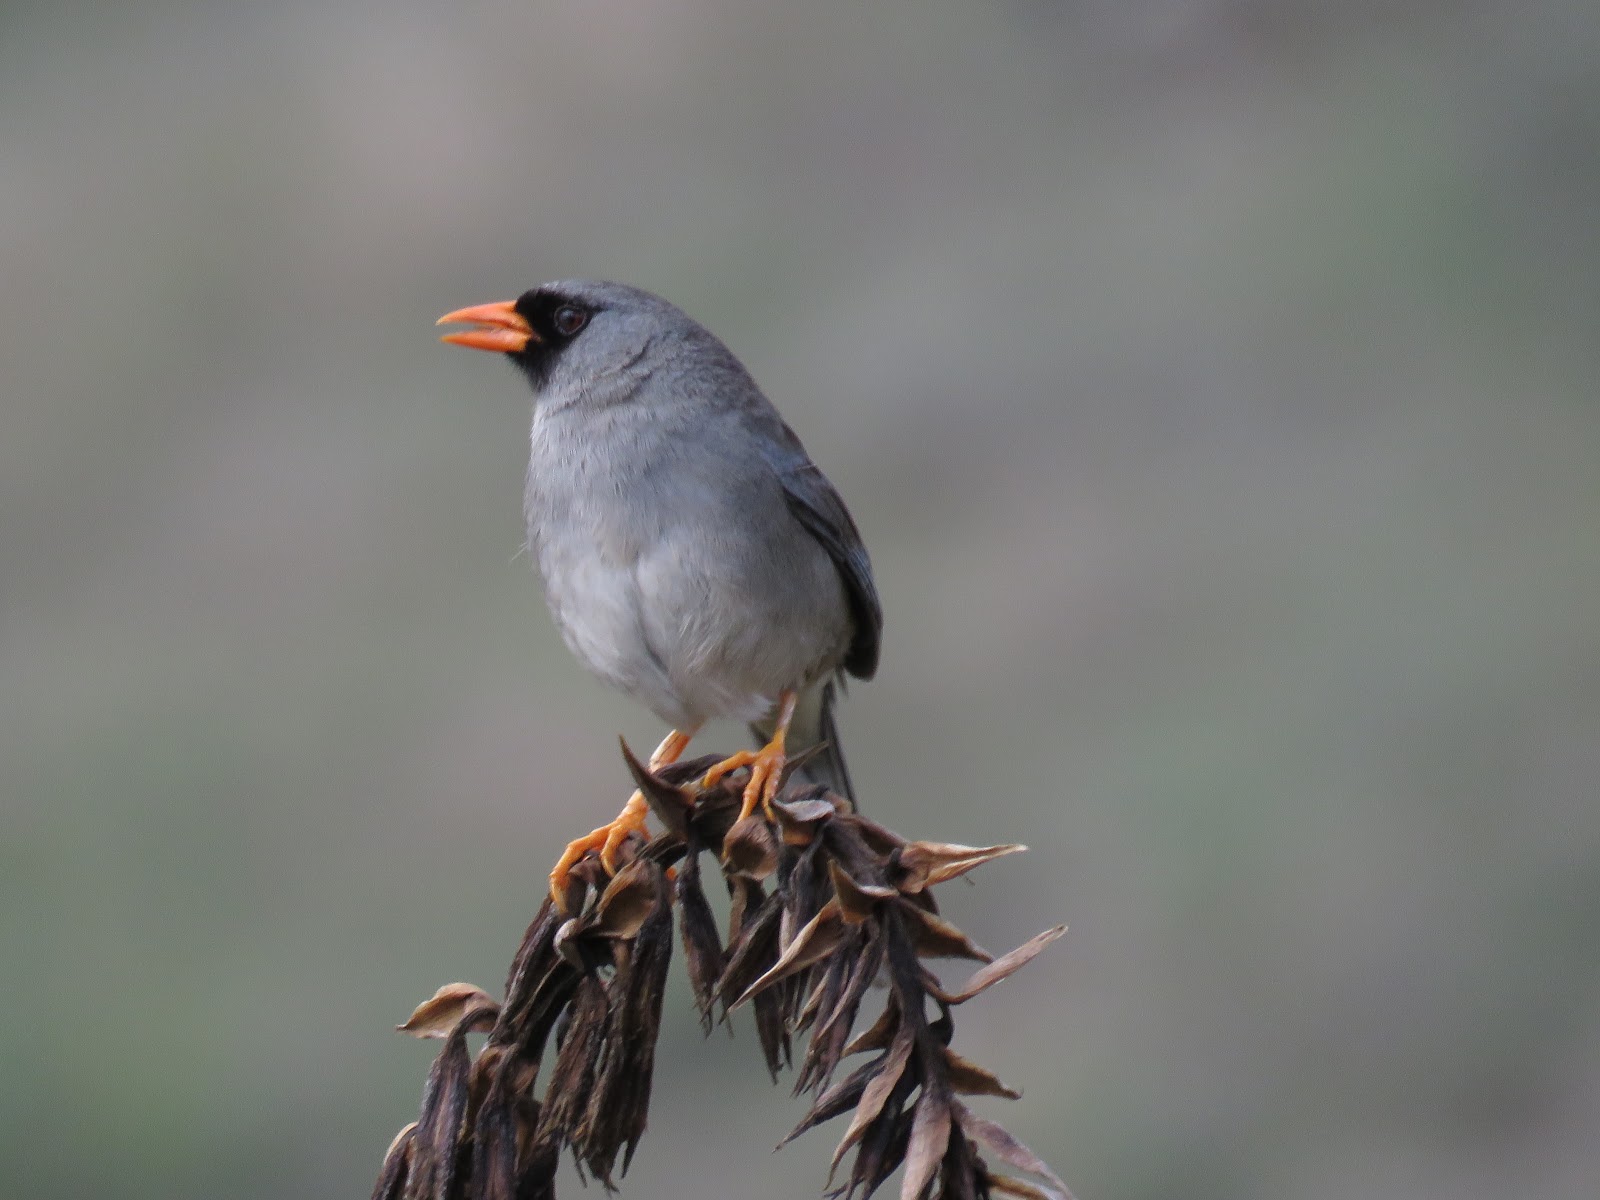 Cajamarca - Birds of Cañon of rió Chonta